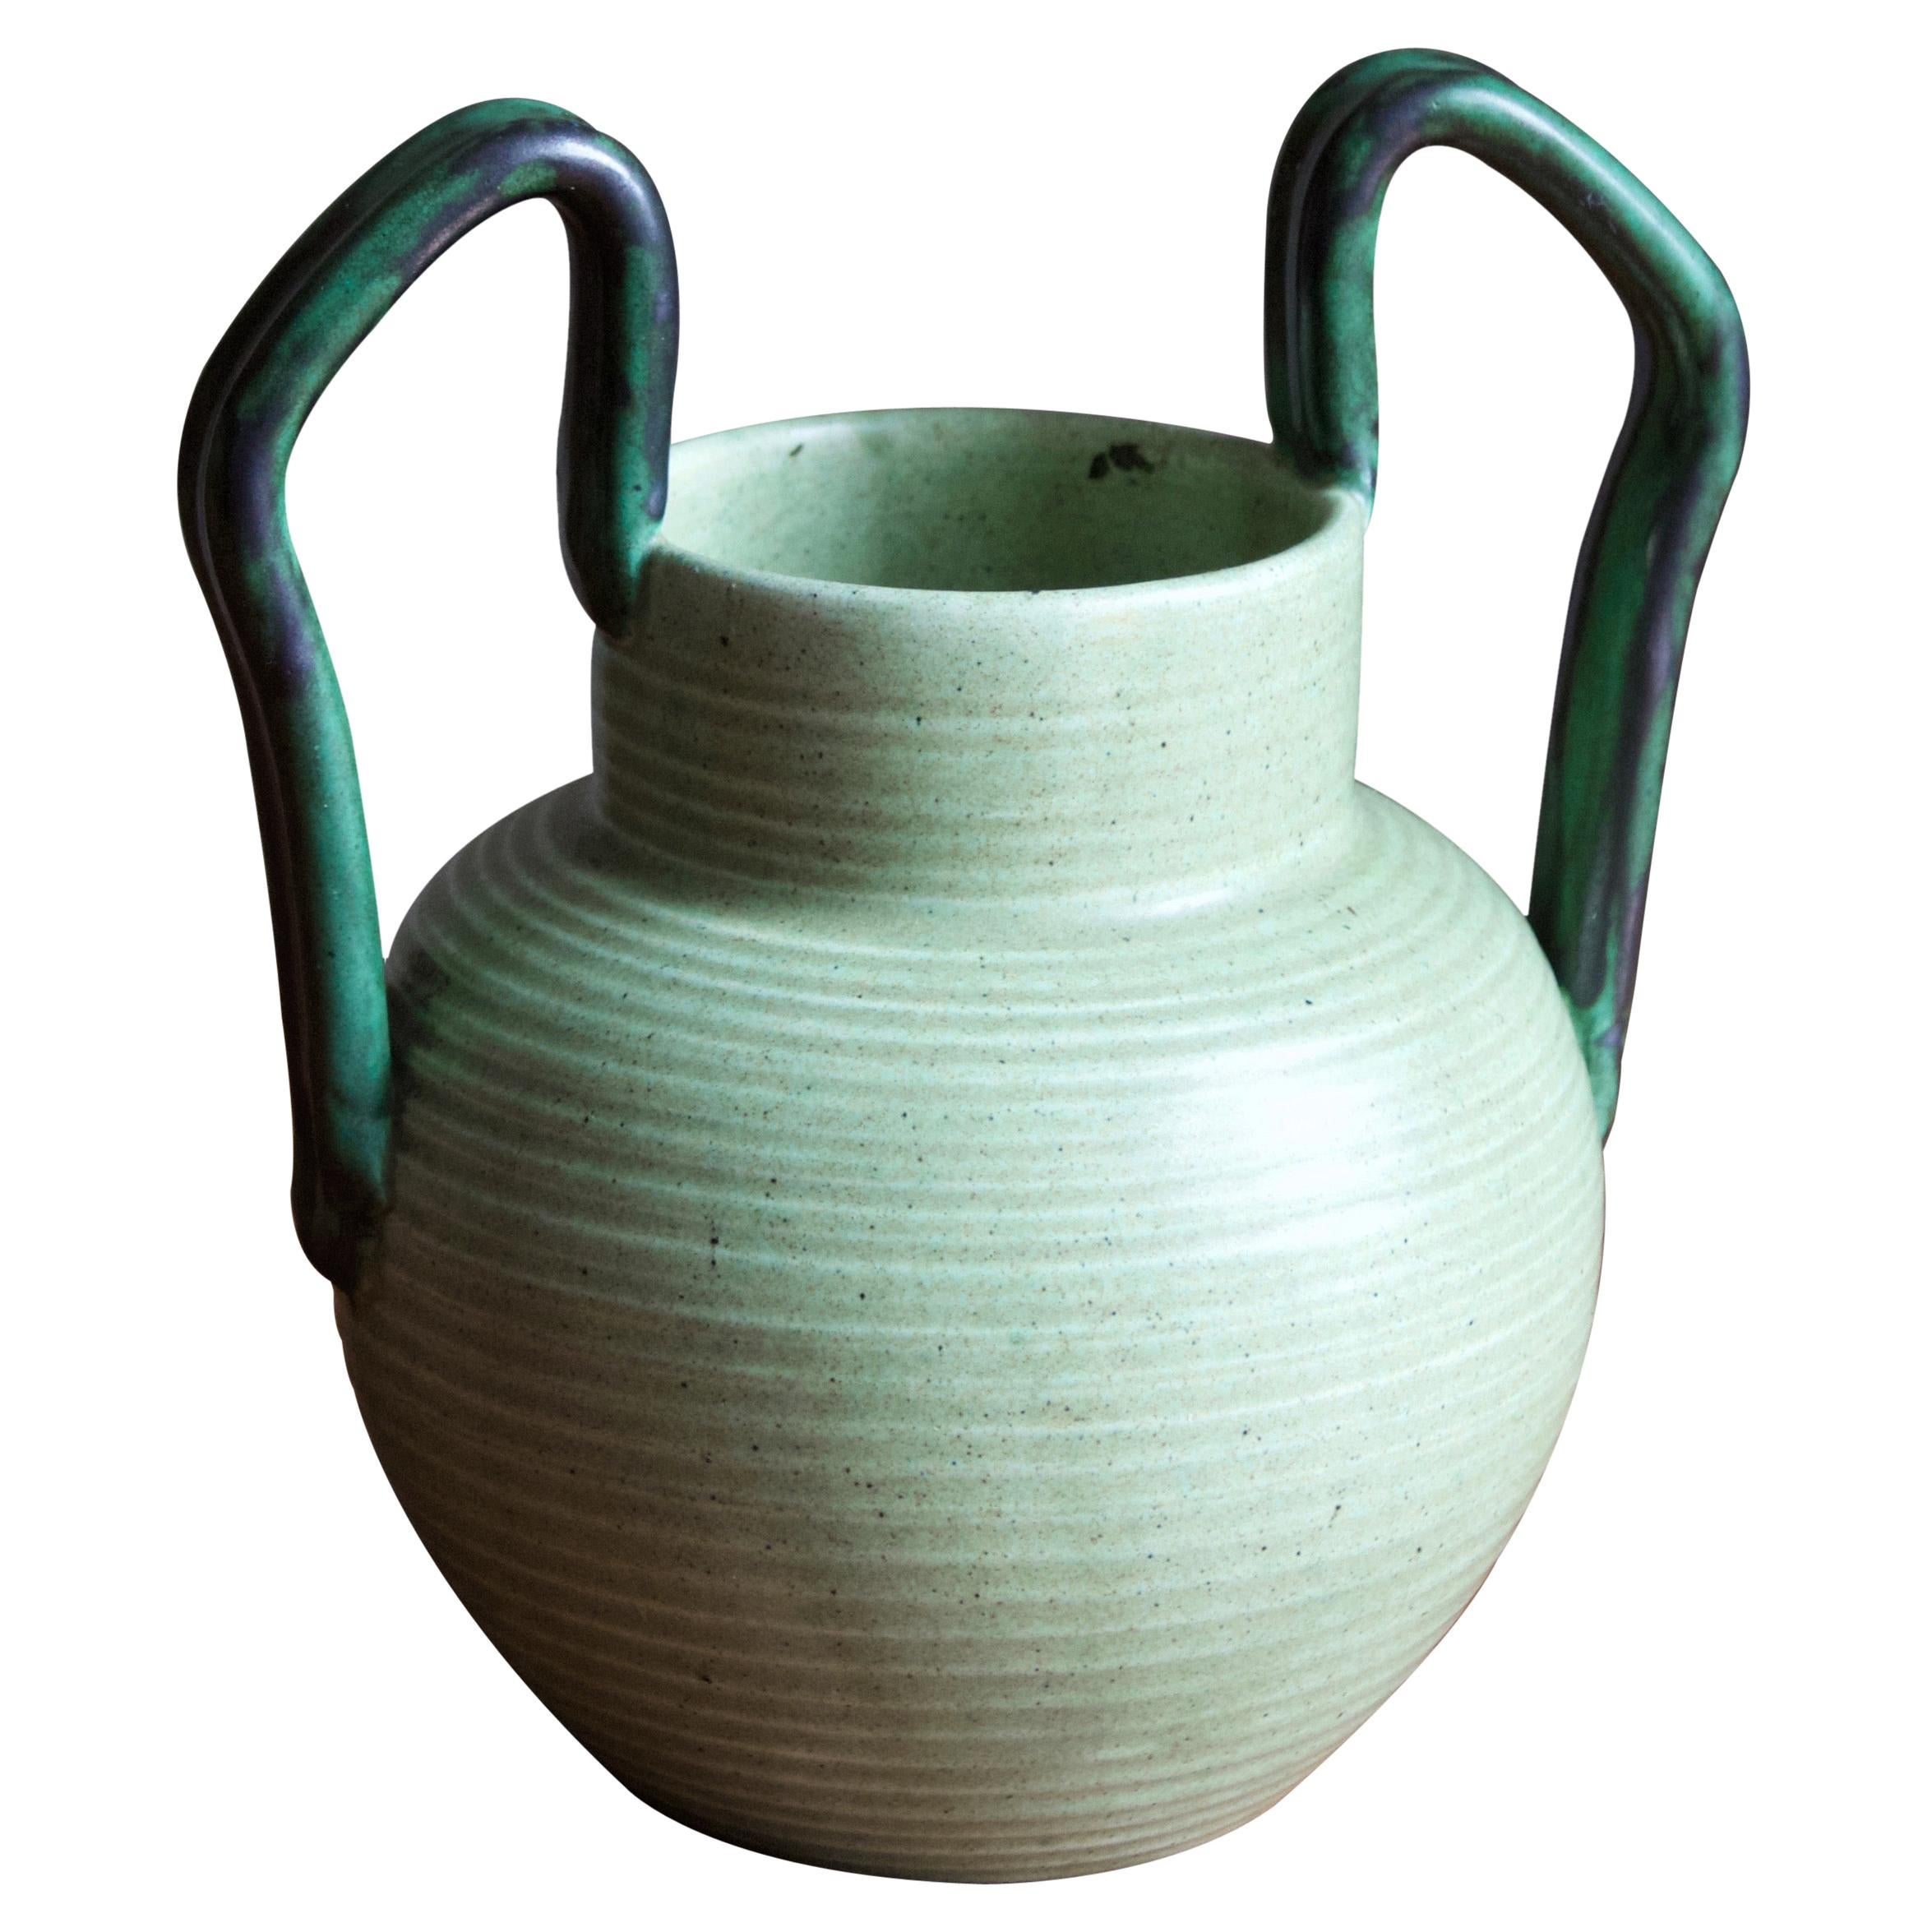 Eva Jancke Björk, Vase, Green Glaze Ceramic, for Bo Fajans, Sweden, 1948